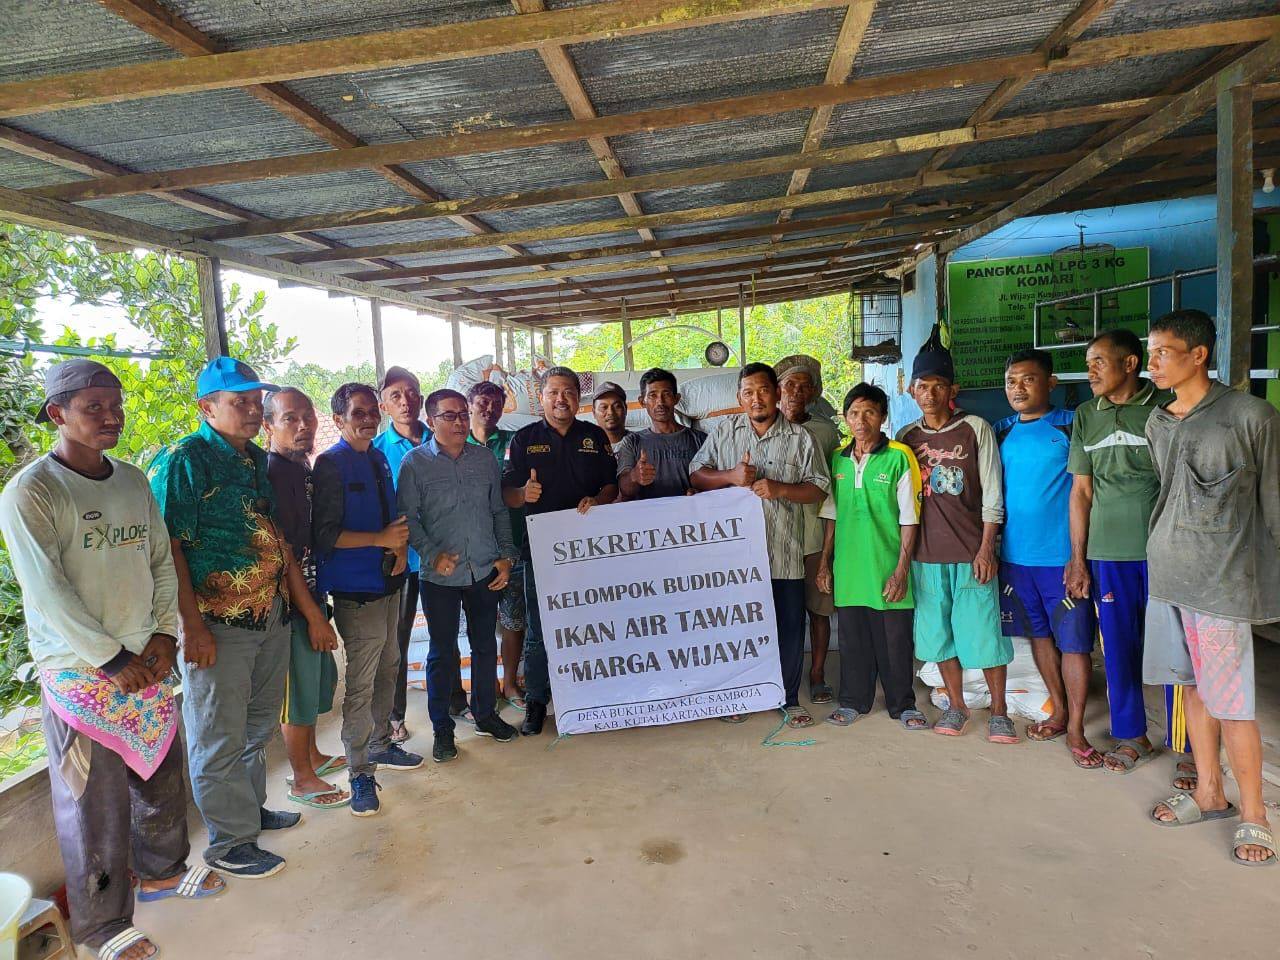 Fachruddin Salurkan Aspirasi 80 Ribu Bibit Ikan dan 150 Karung Pakan di Kelompok Budidaya Desa Bukit Raya Samboja